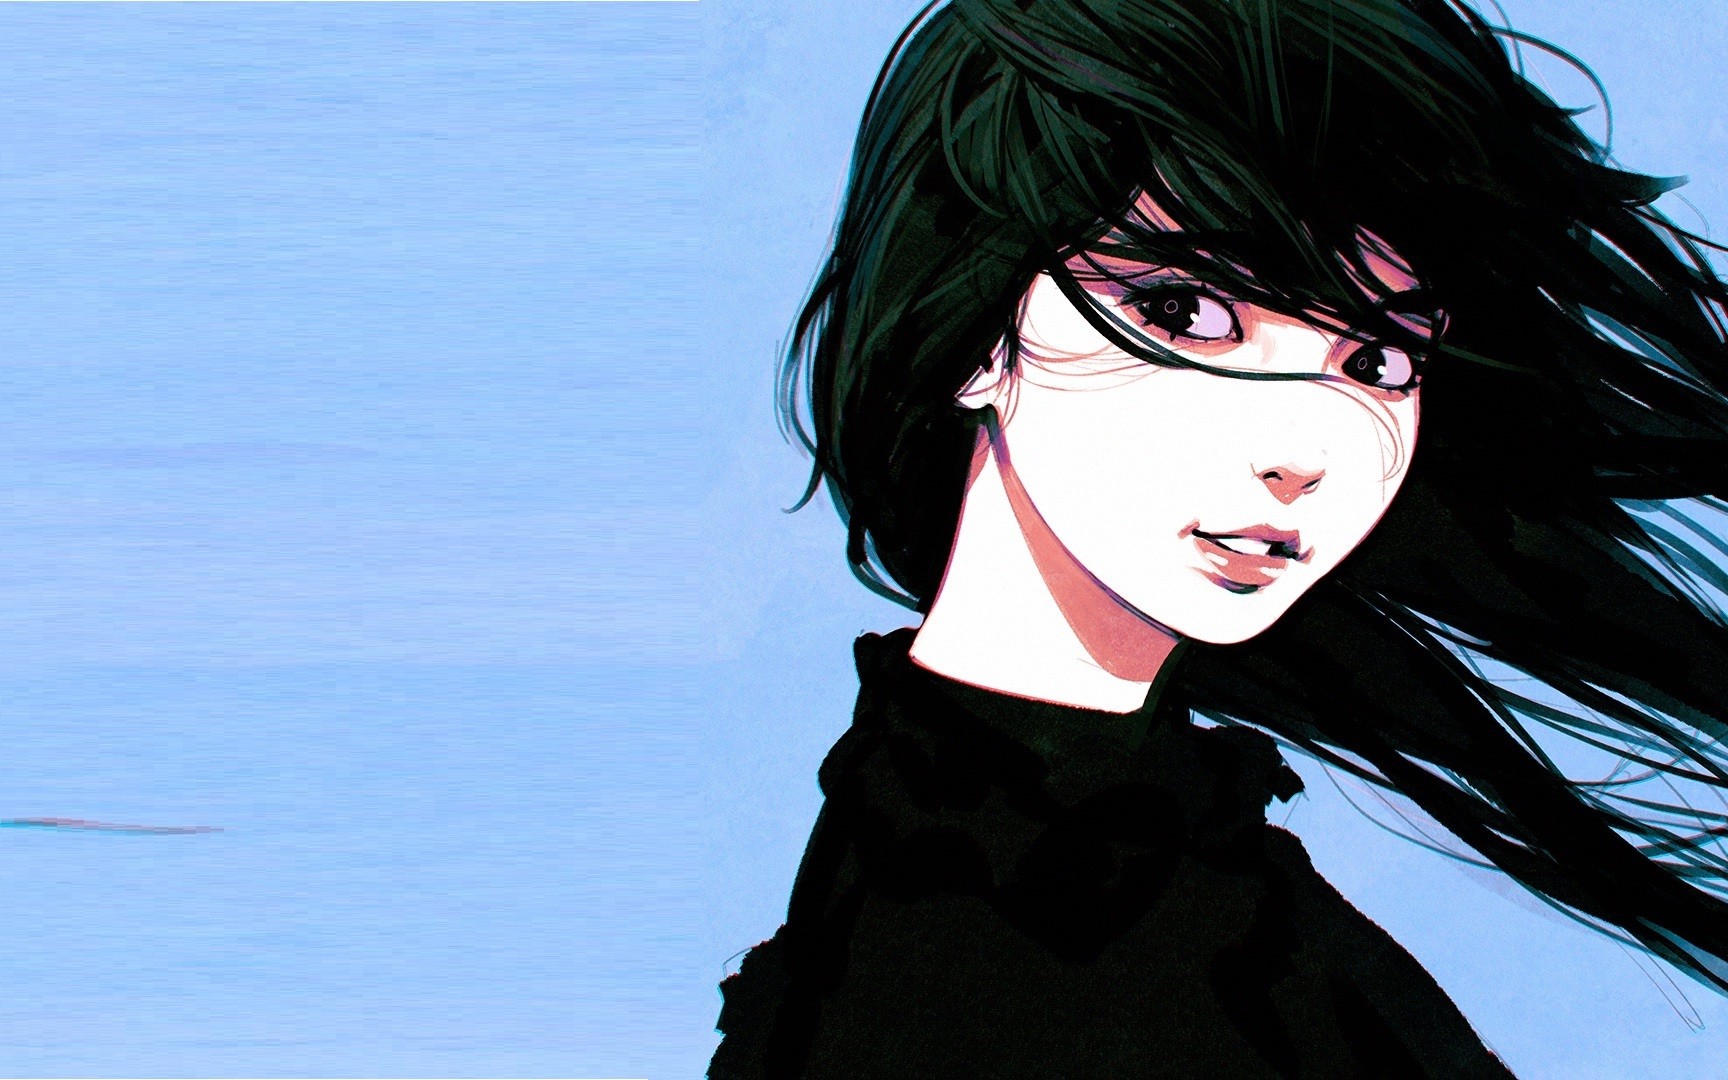 manga maker comipo character in black